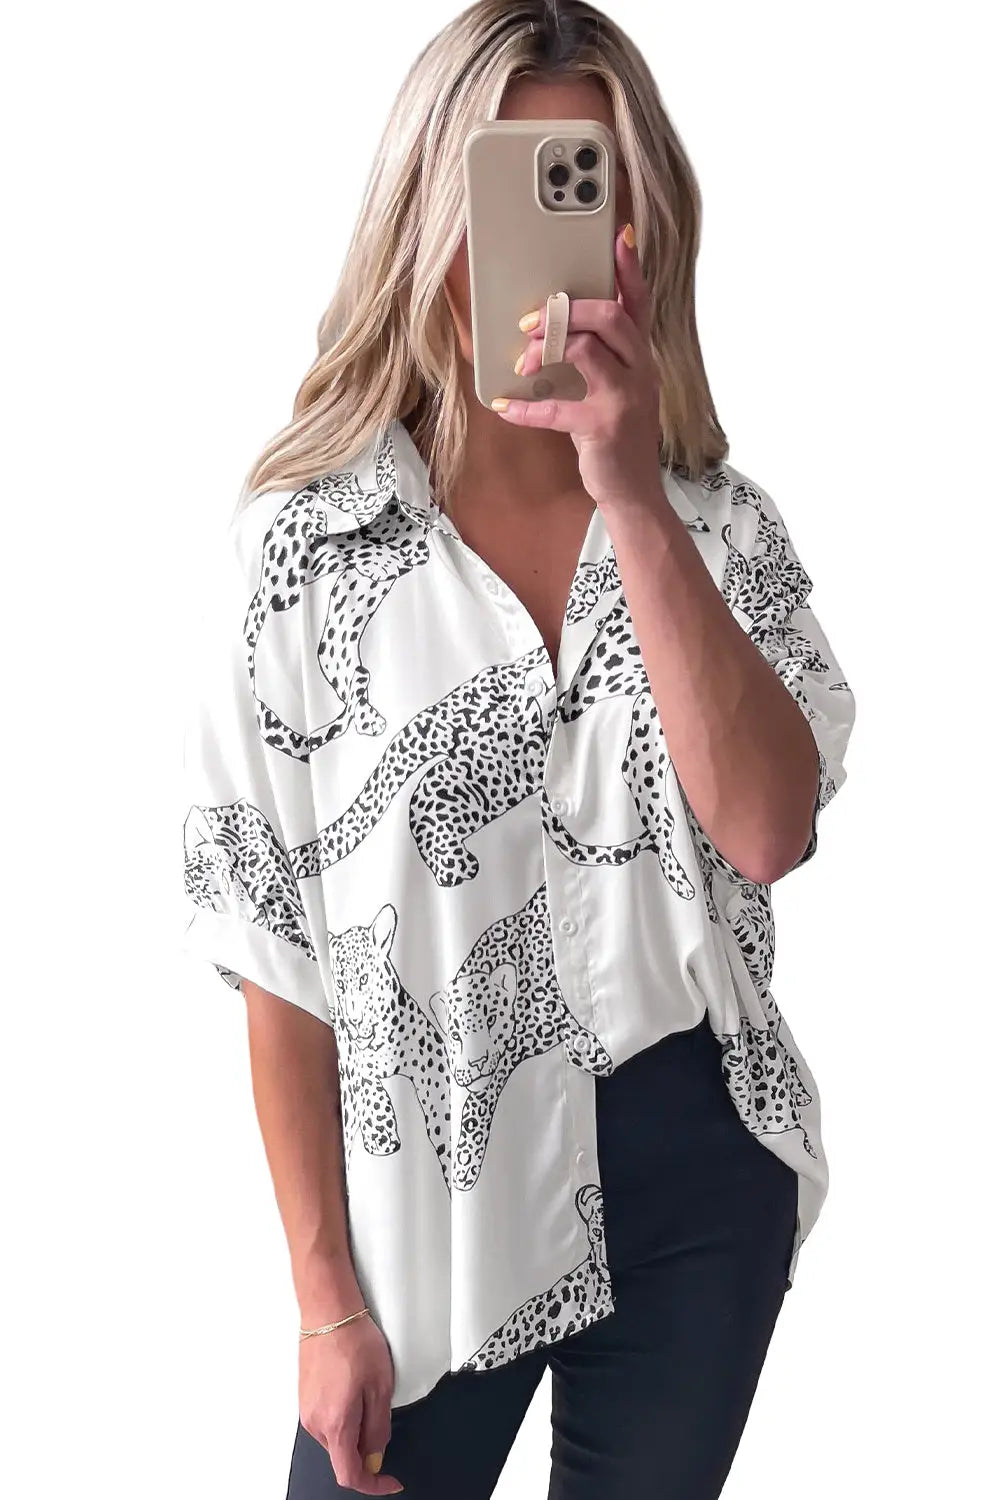 Beige cheetah print buttoned half sleeve shirt - blouses & shirts